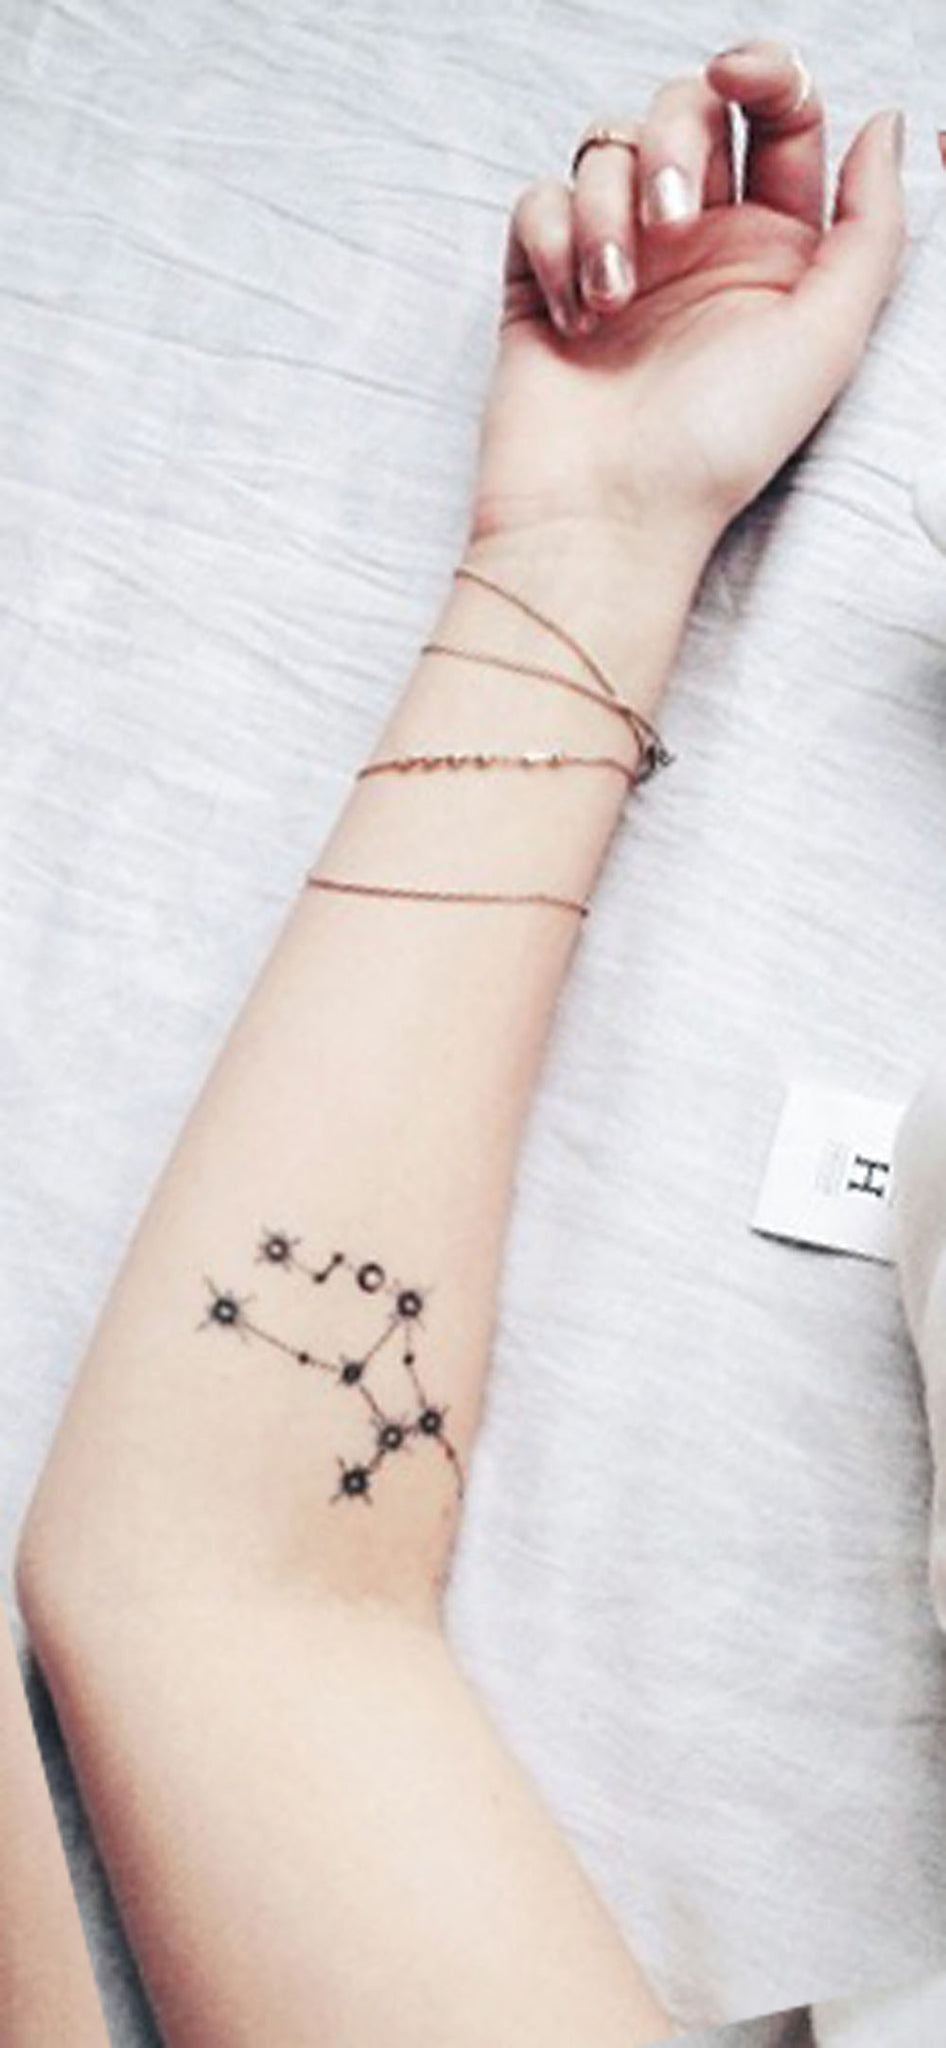 Womens Minimal Small Constellation Star Forearm Tattoo Ideas -  constelación estrella antebrazo tatuaje ideas - www.MyBodiArt.com